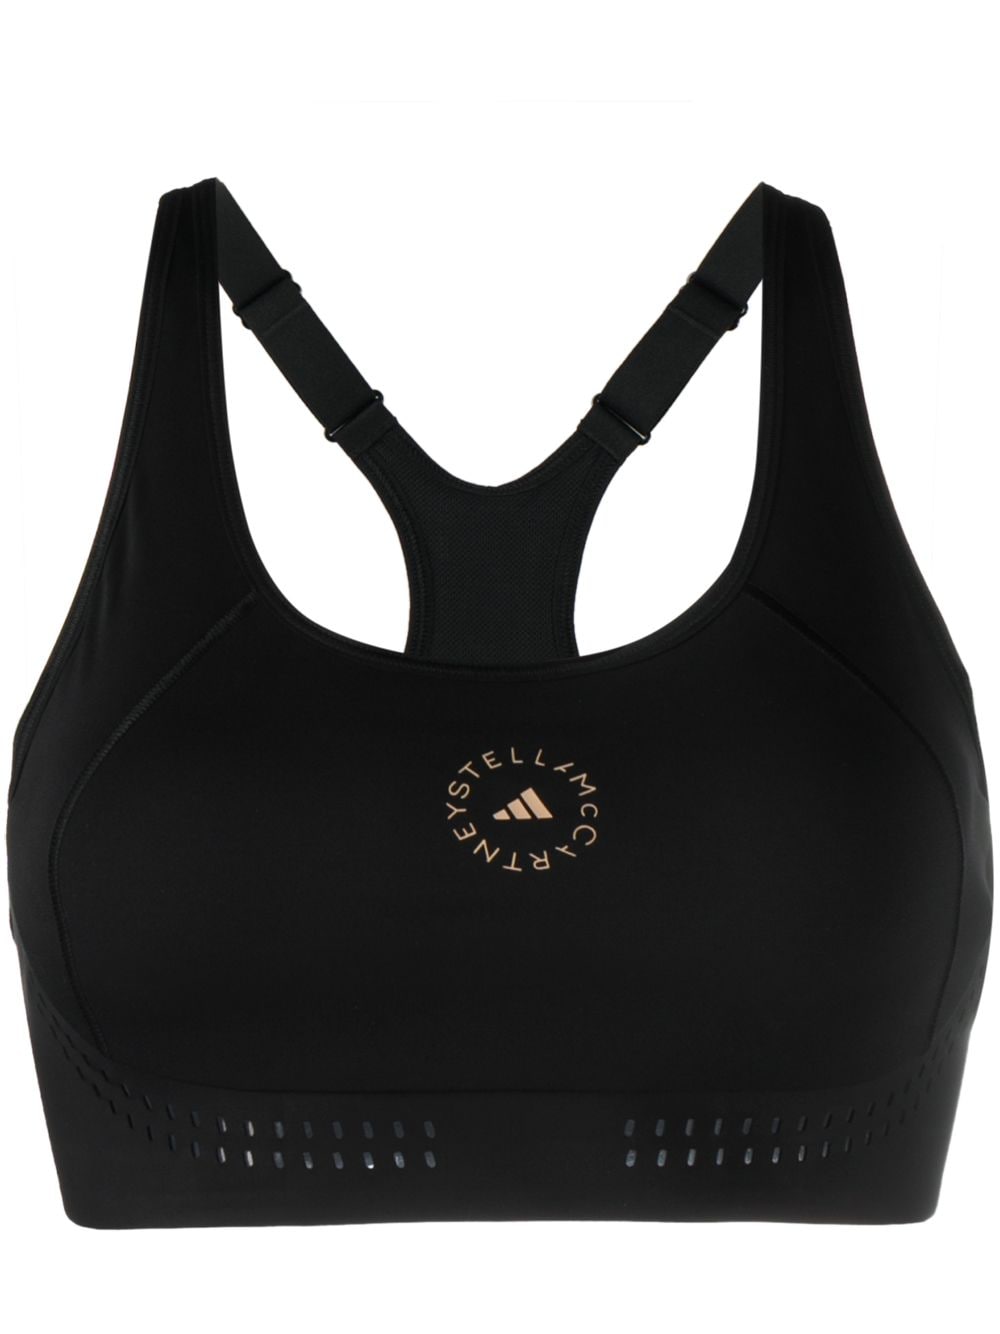 adidas by stella mccartney truepurpose training sports bra - black